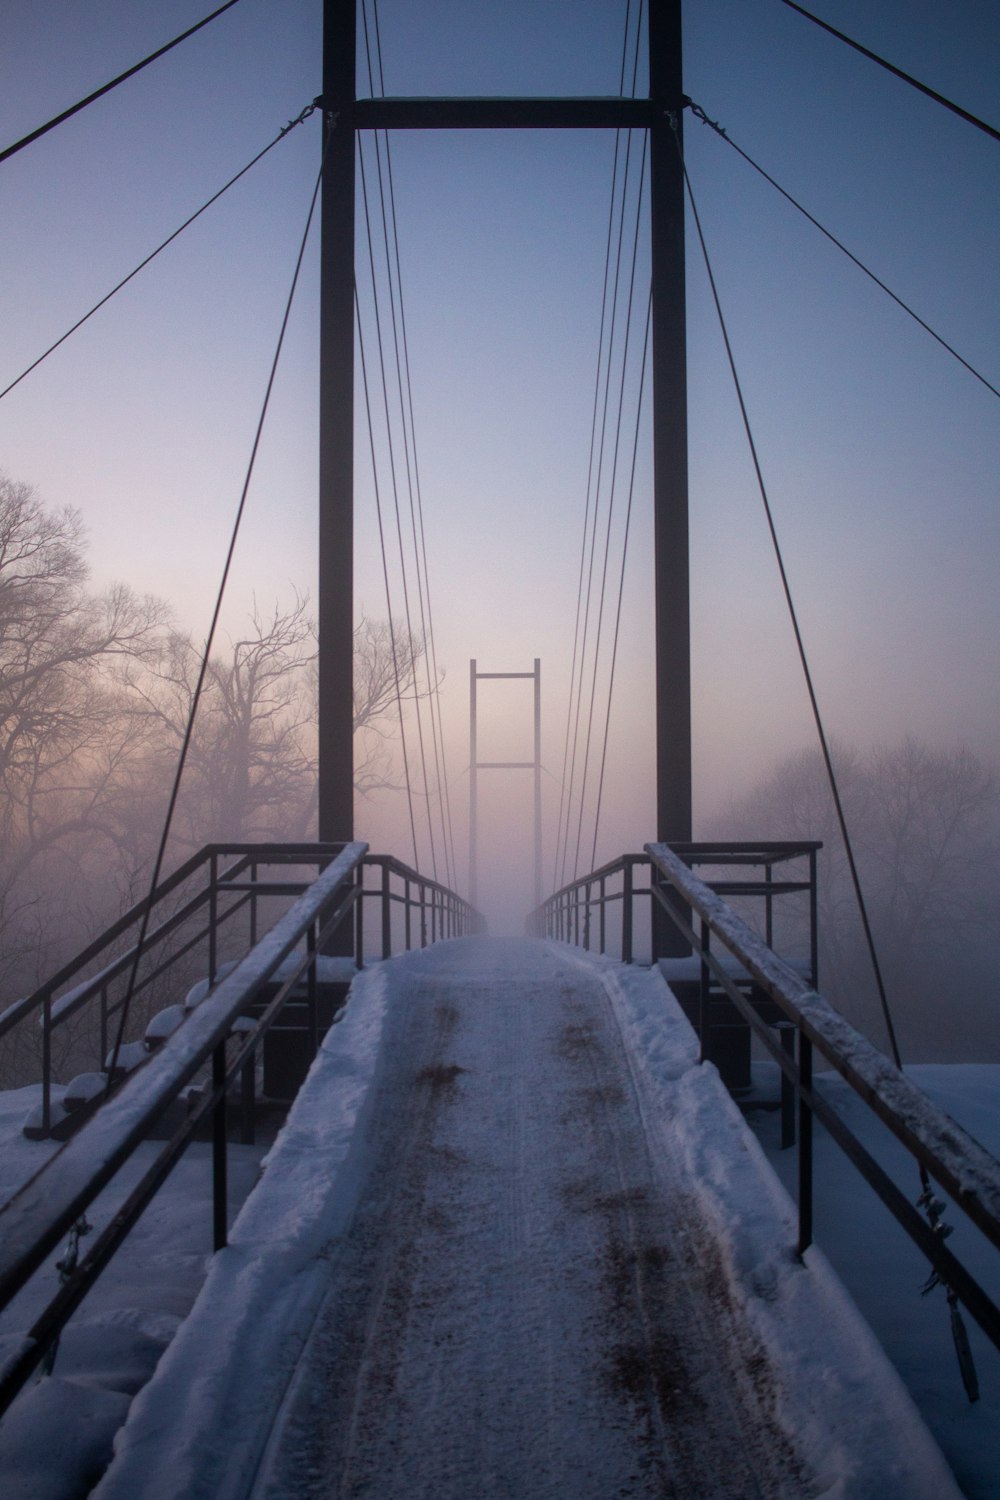 a bridge that has snow on the ground